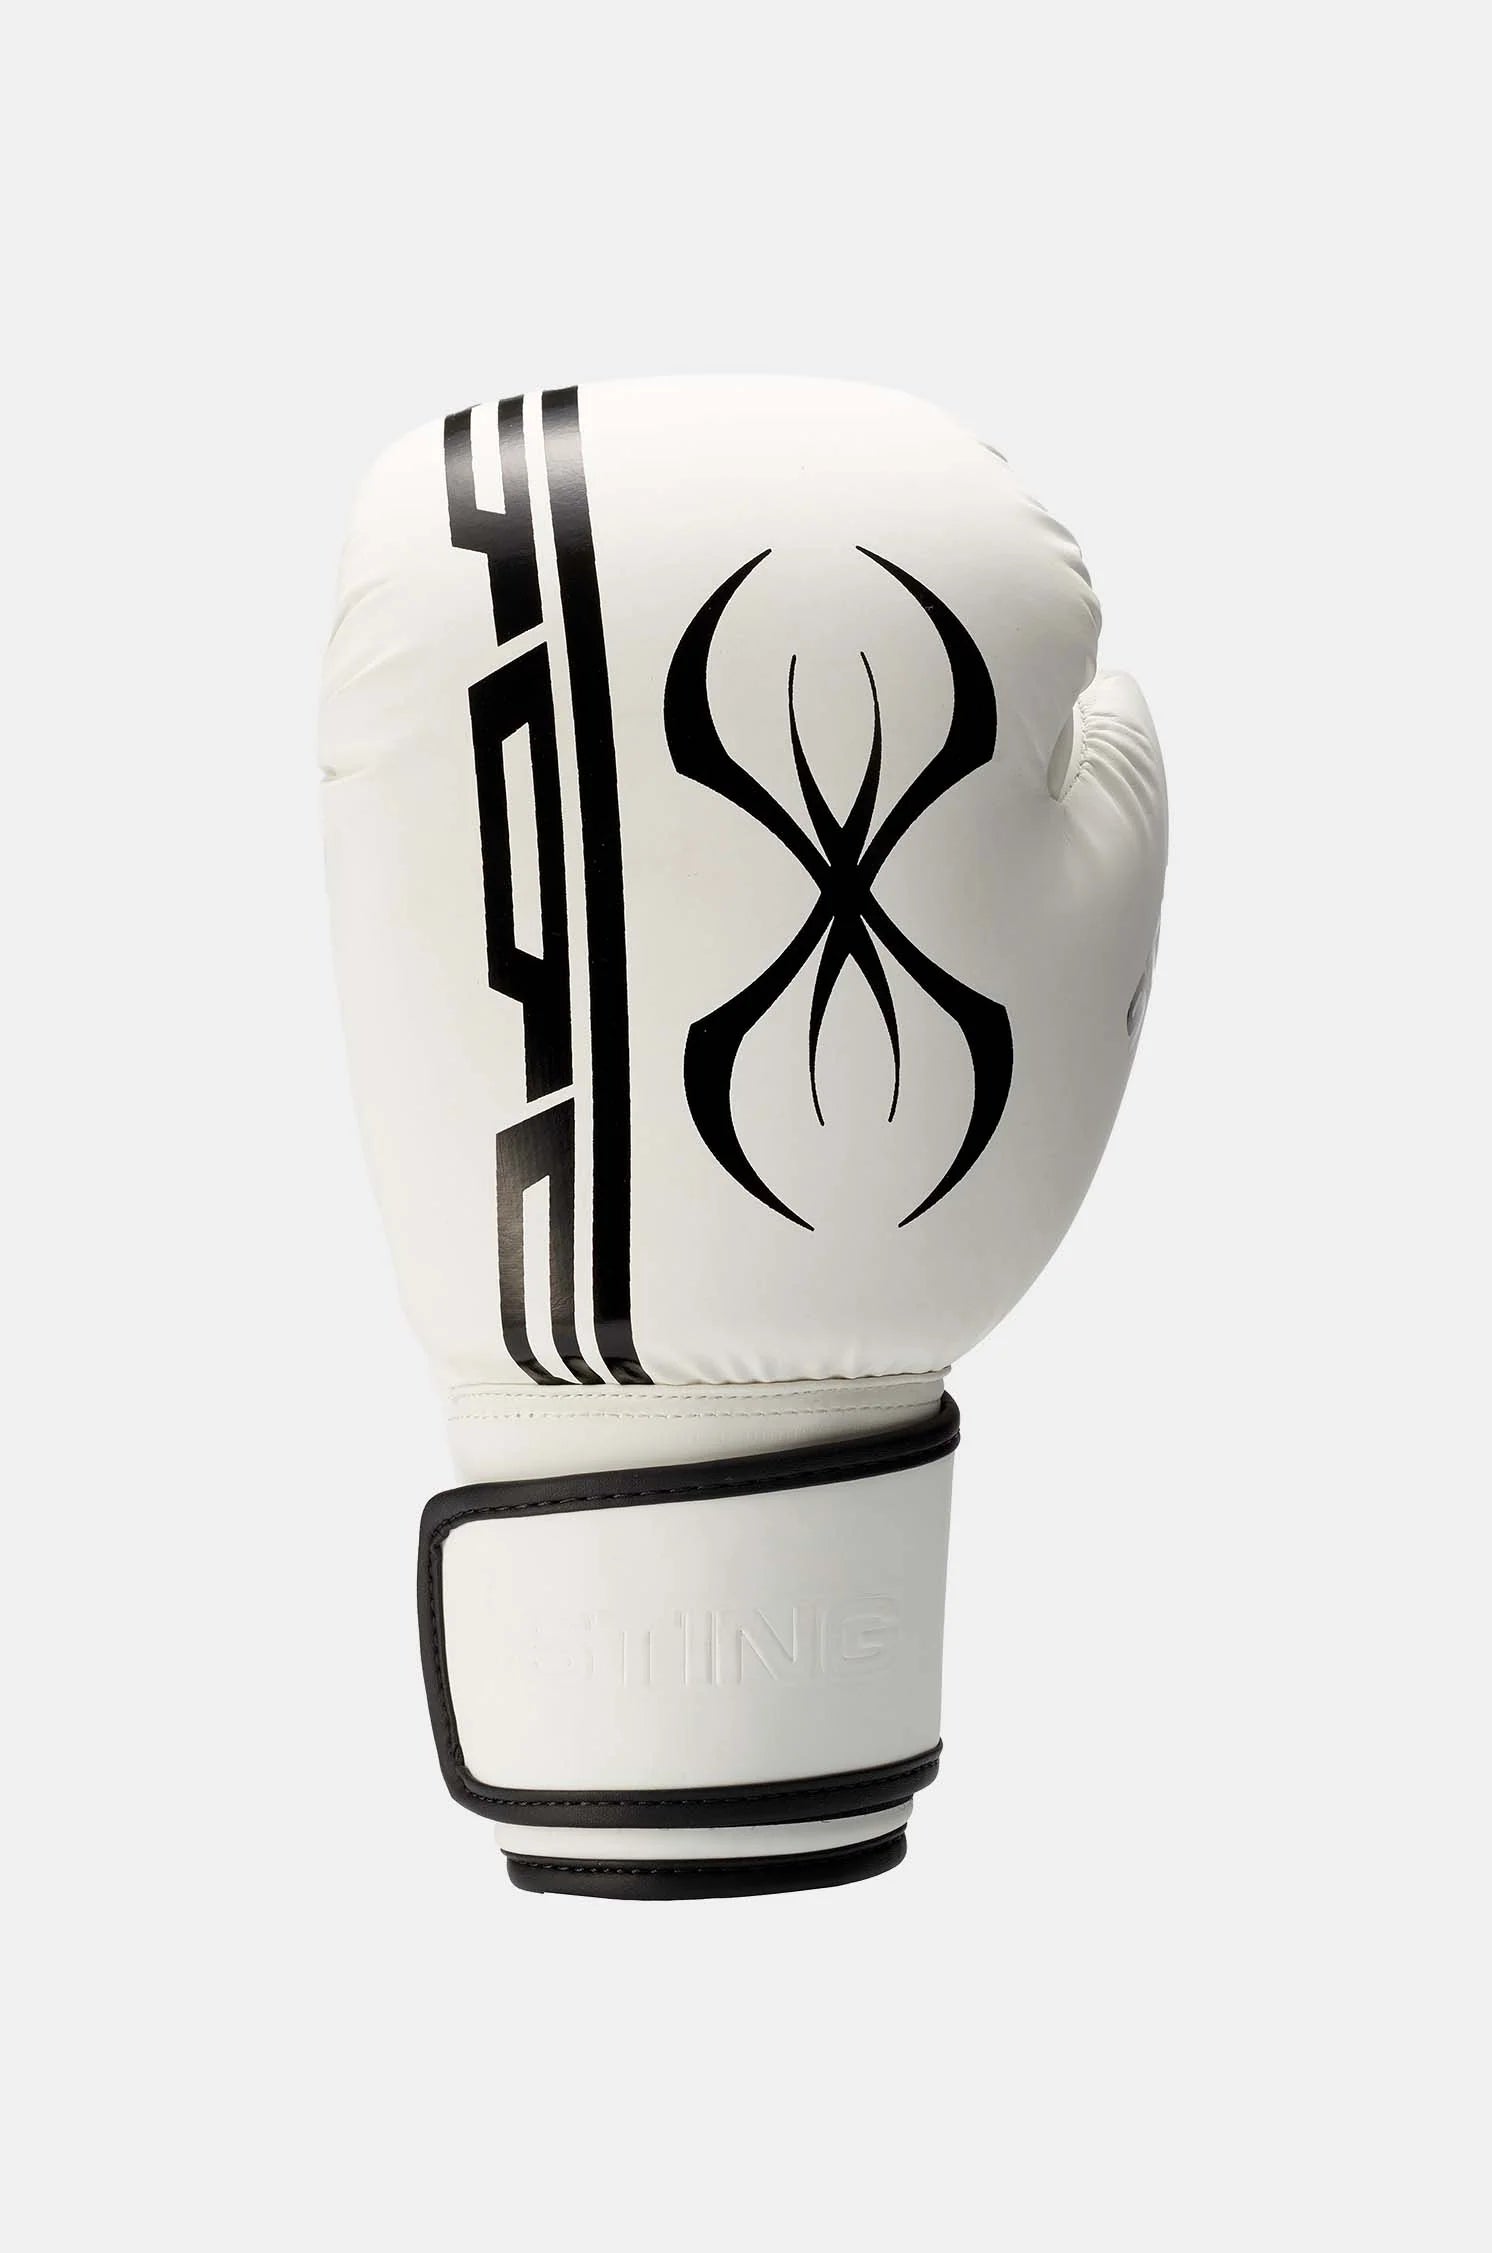 Sting Armaplus Boxing Gloves STING